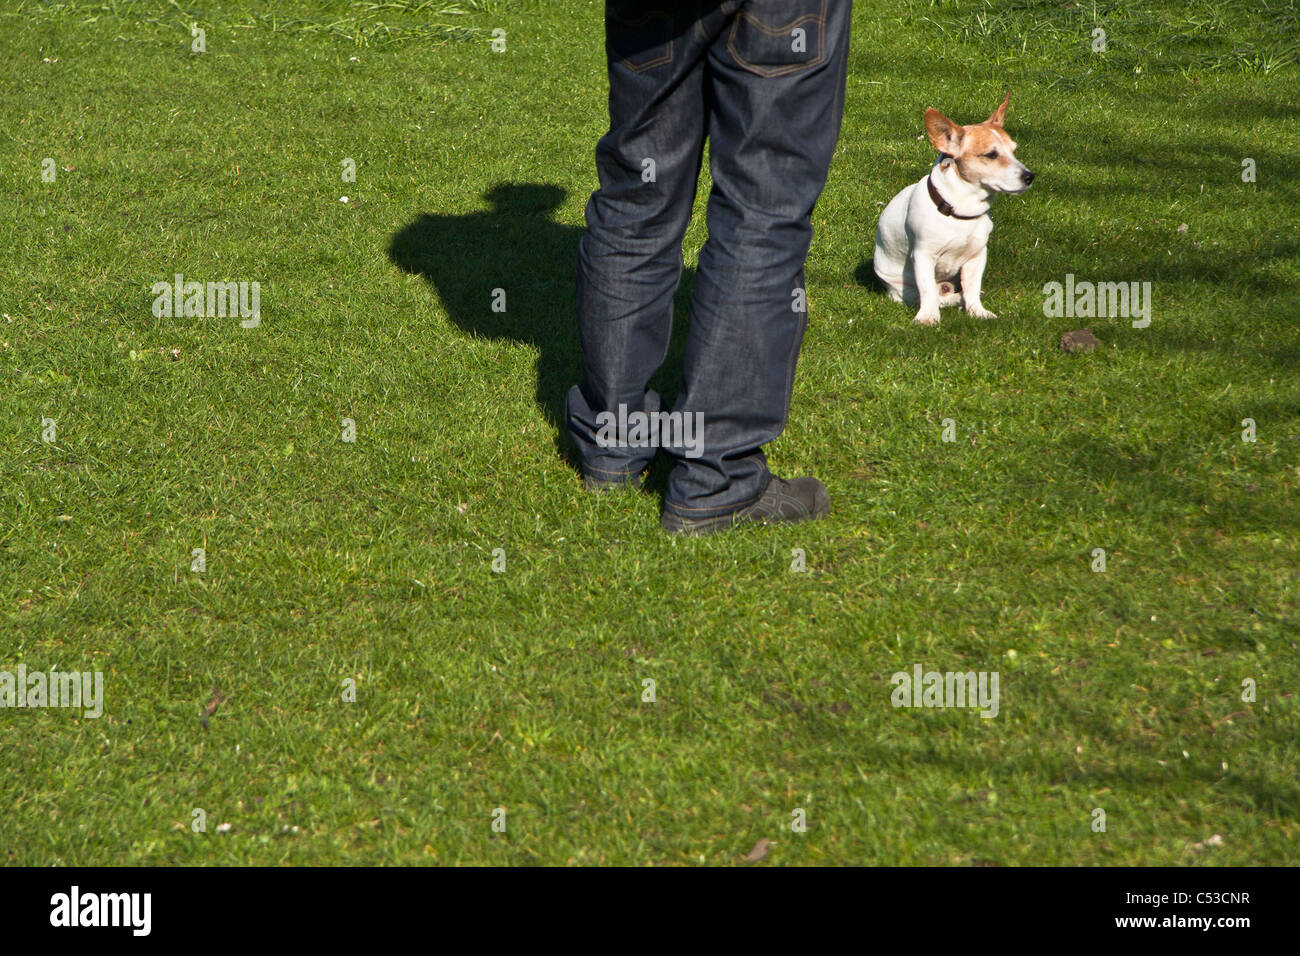 Man taking a dog for a walk Stock Photo